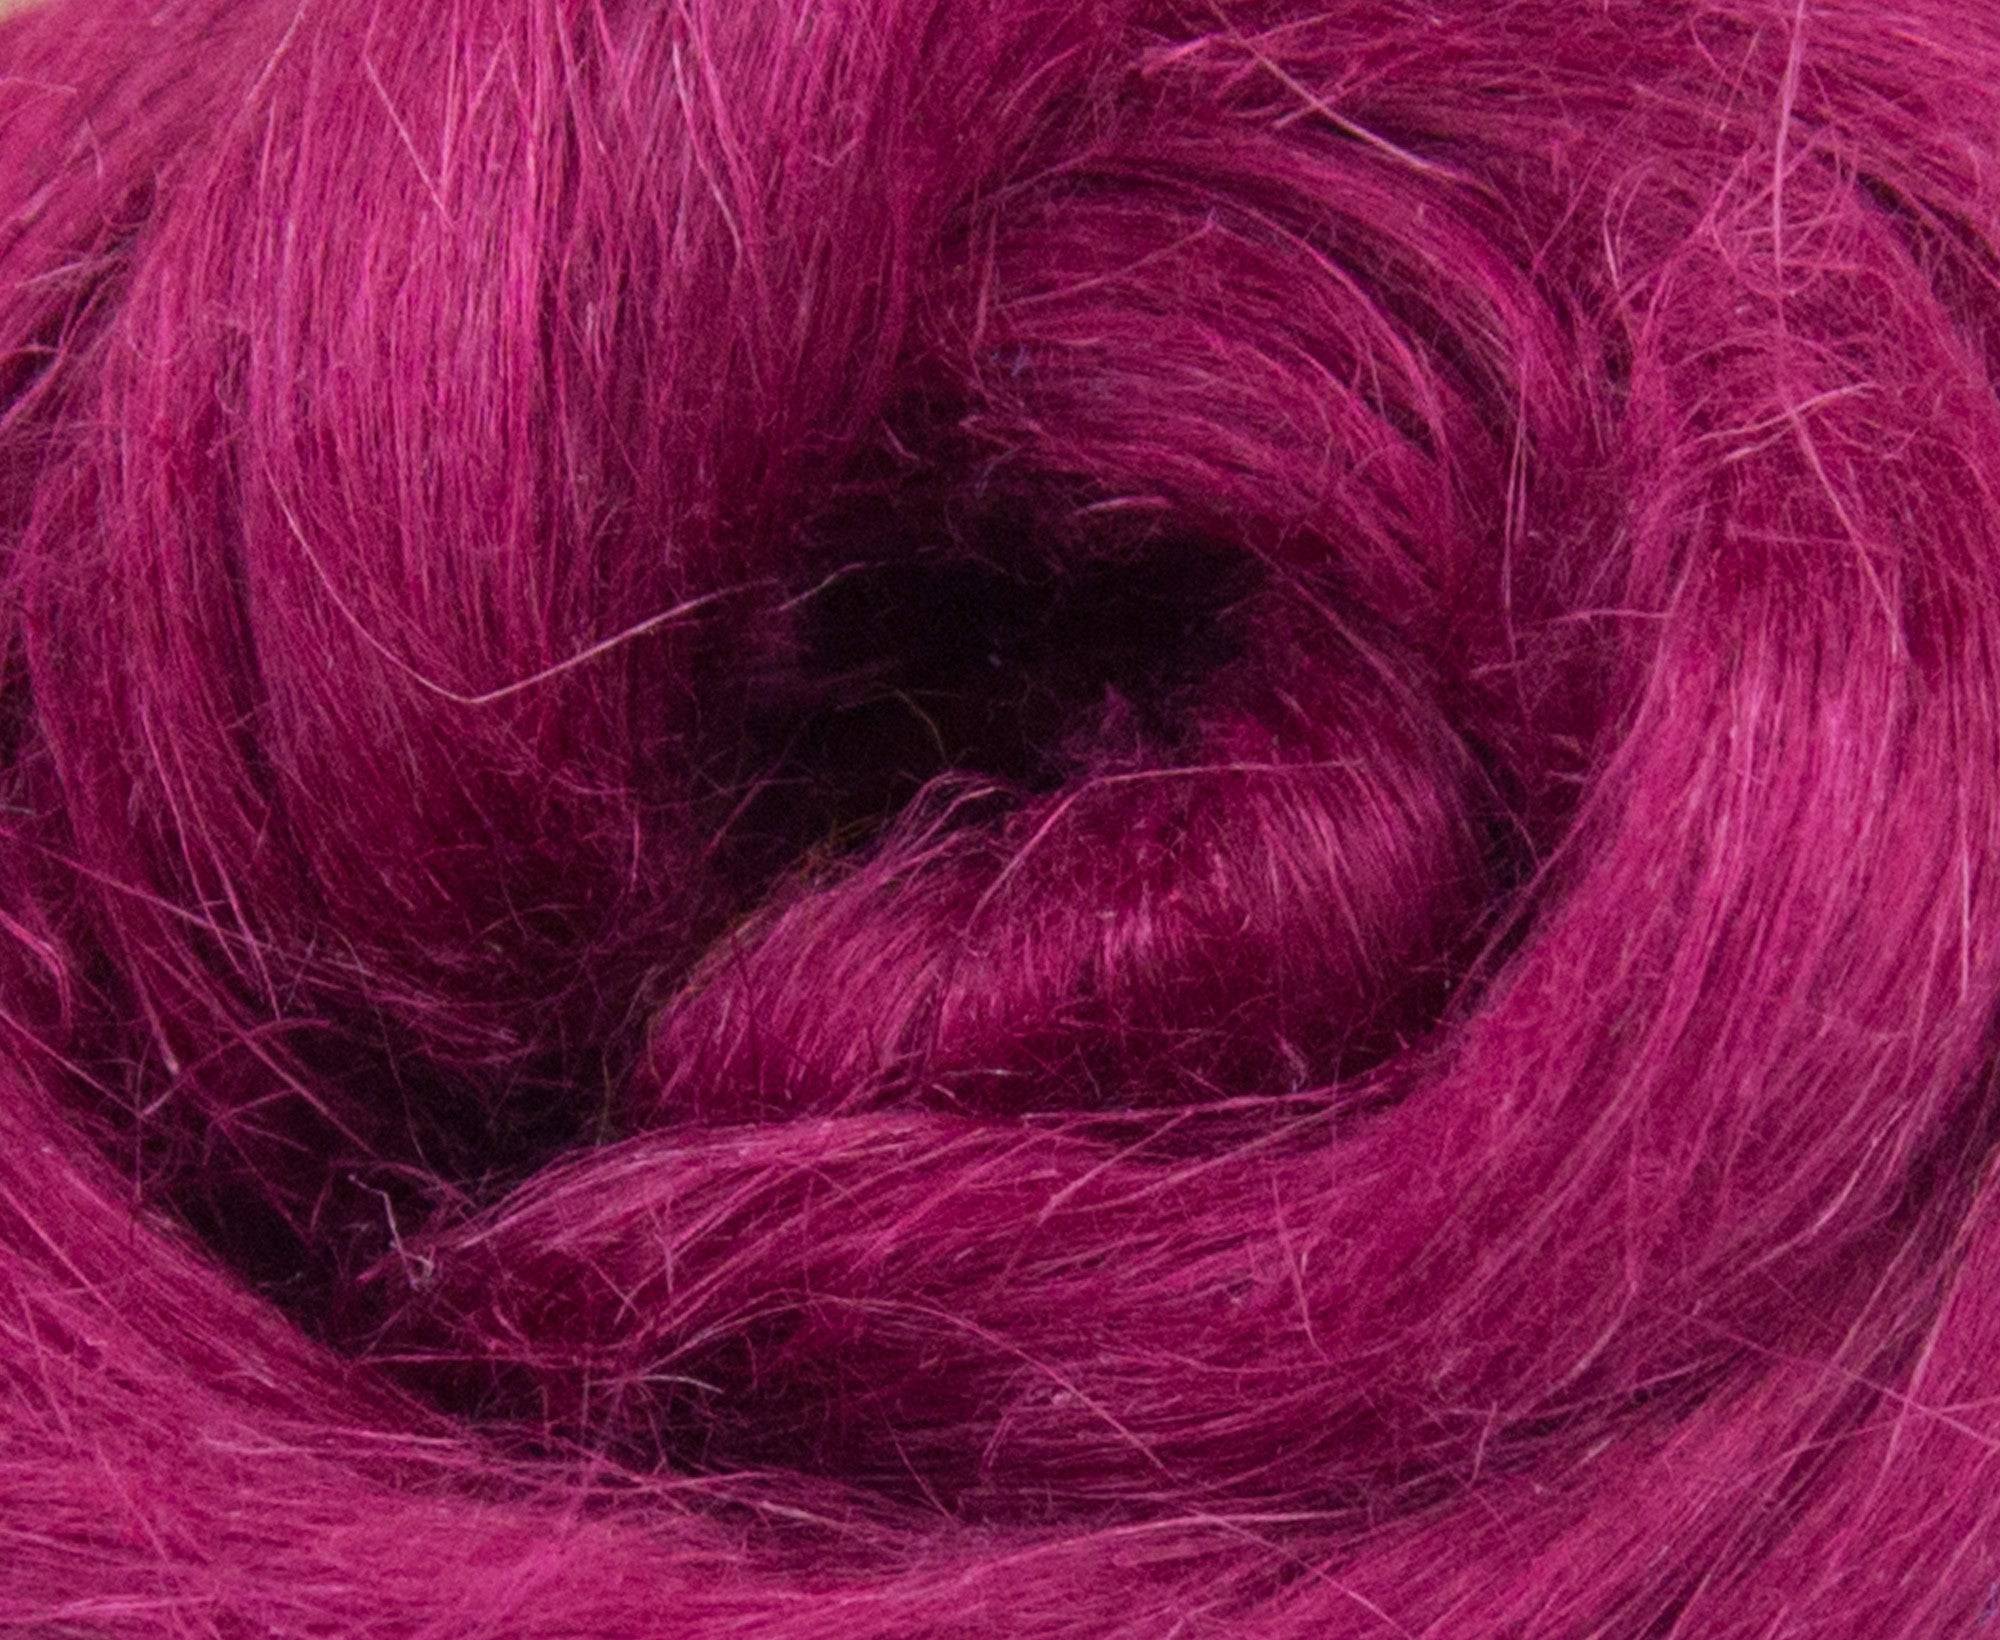 Carmine Flax/Linen Top - World of Wool